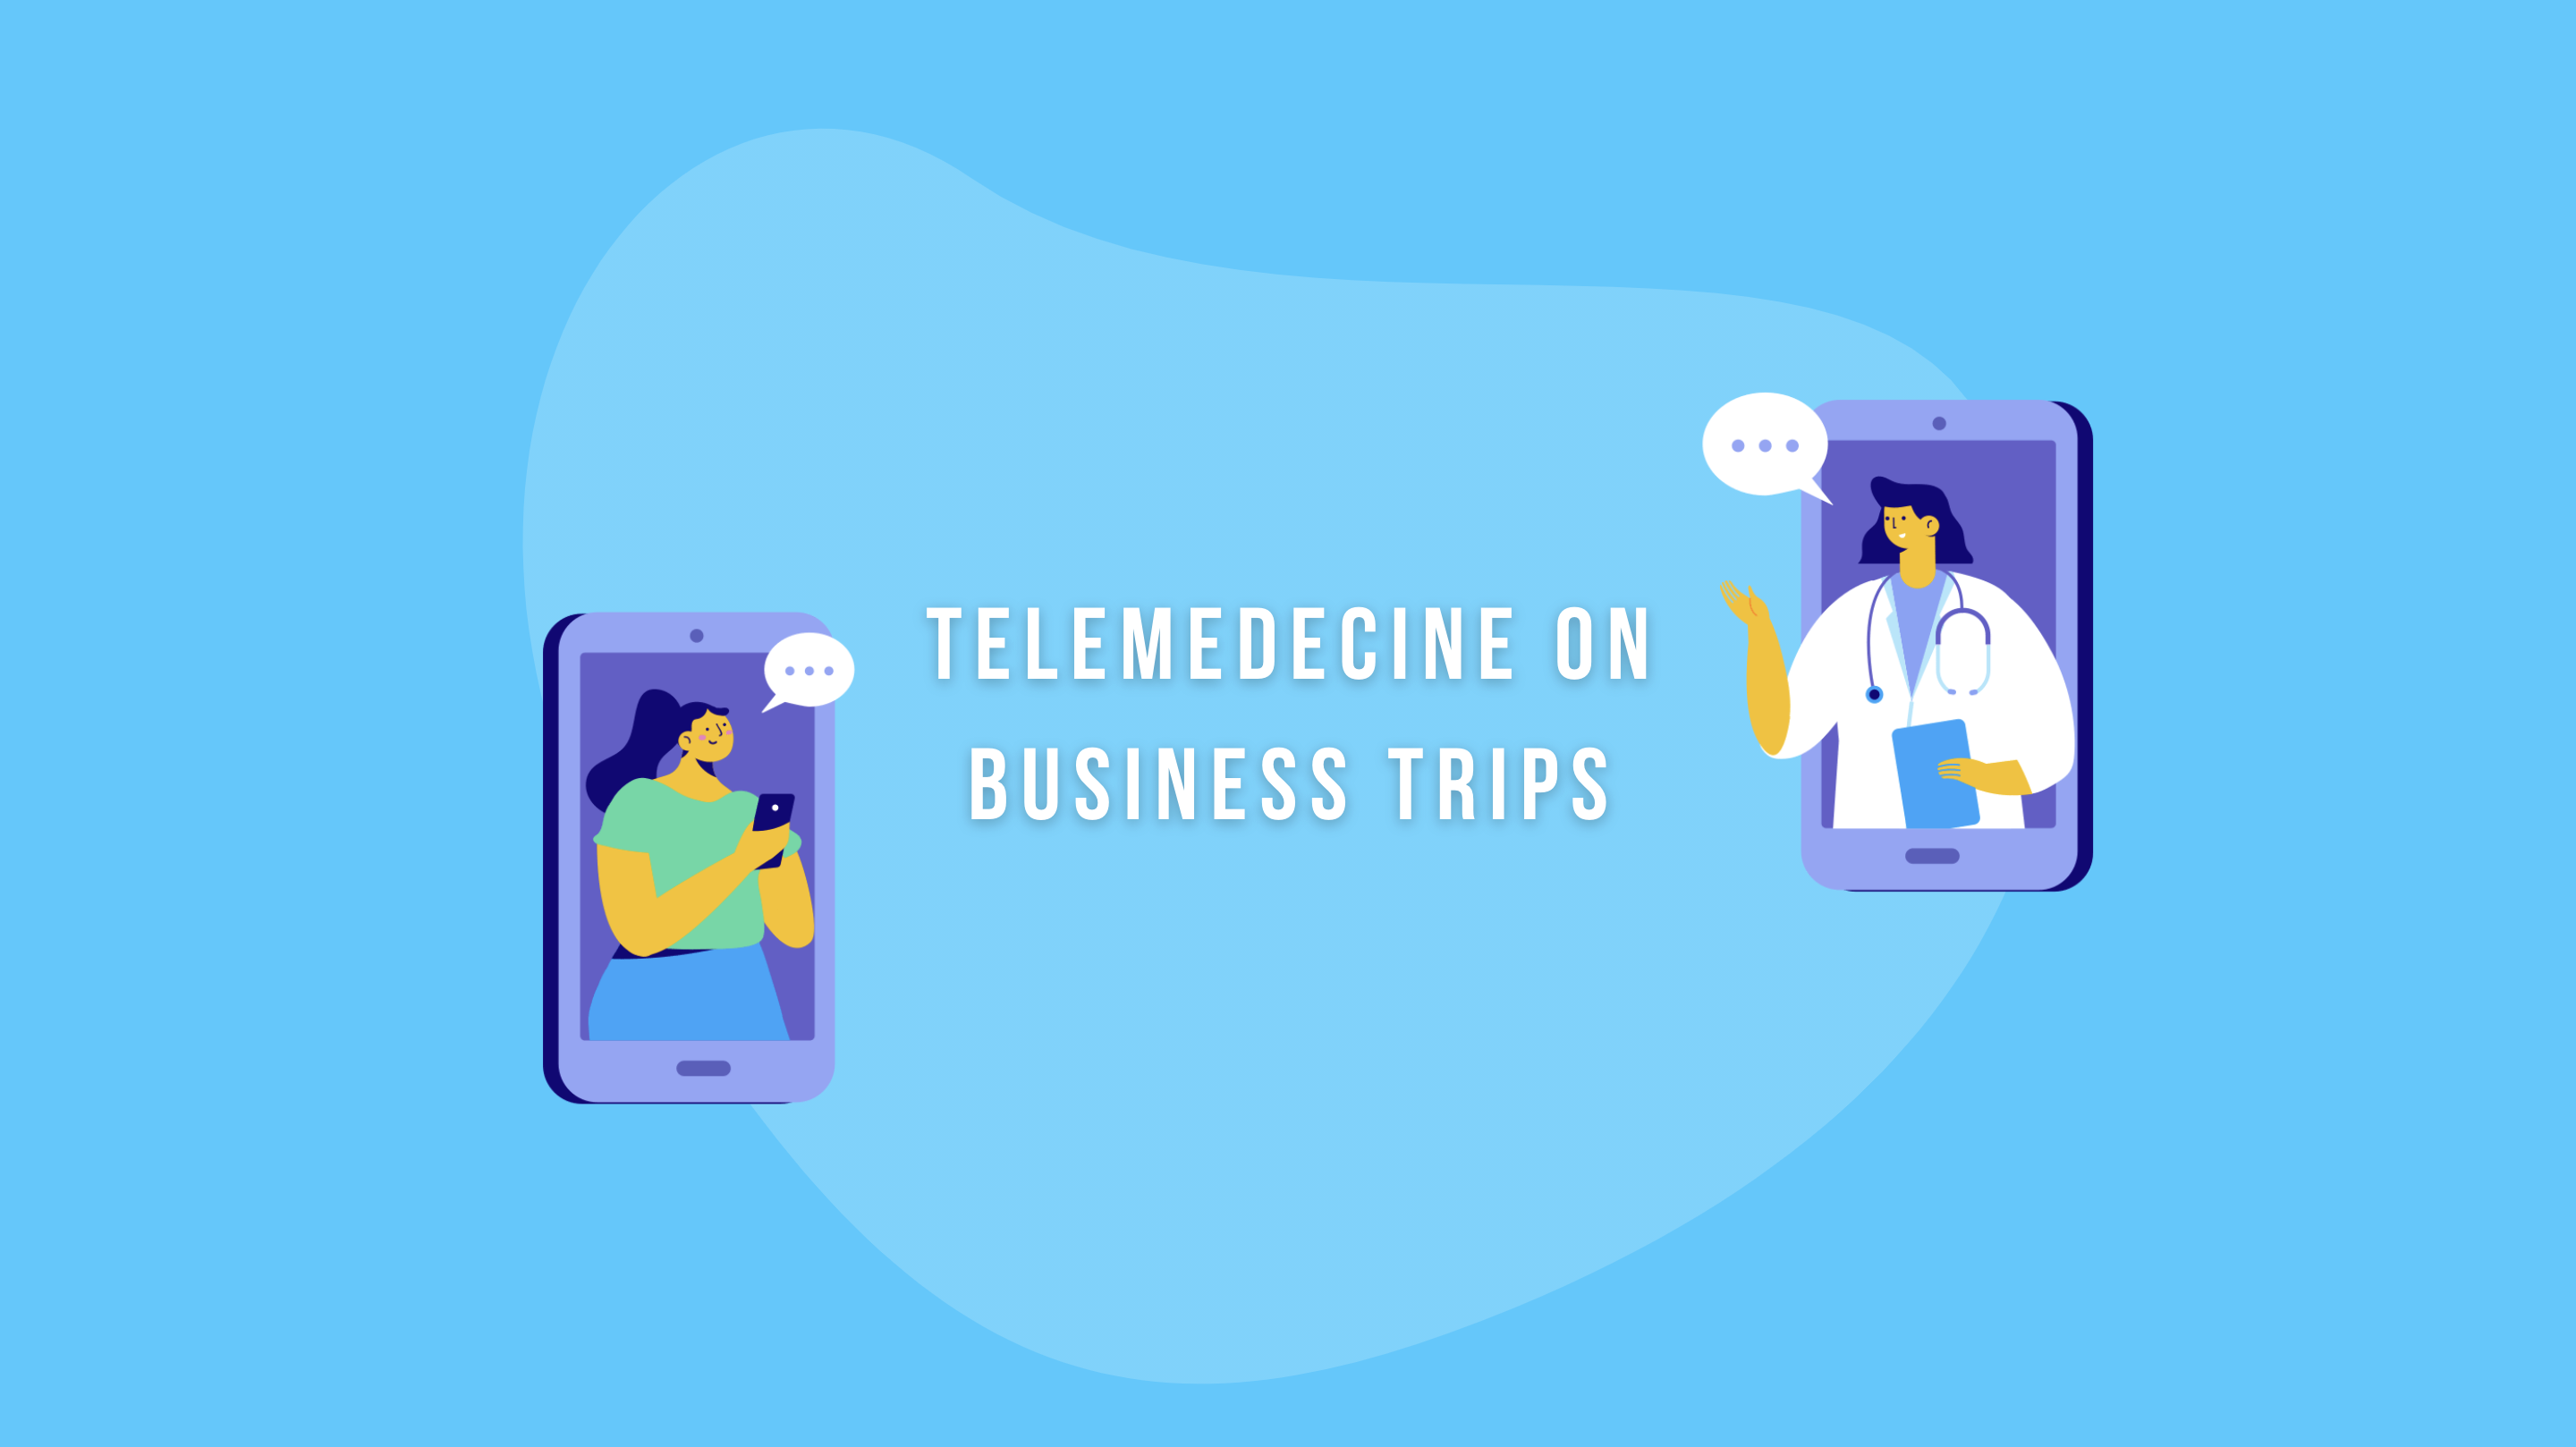 Telemedecine importance on business trips